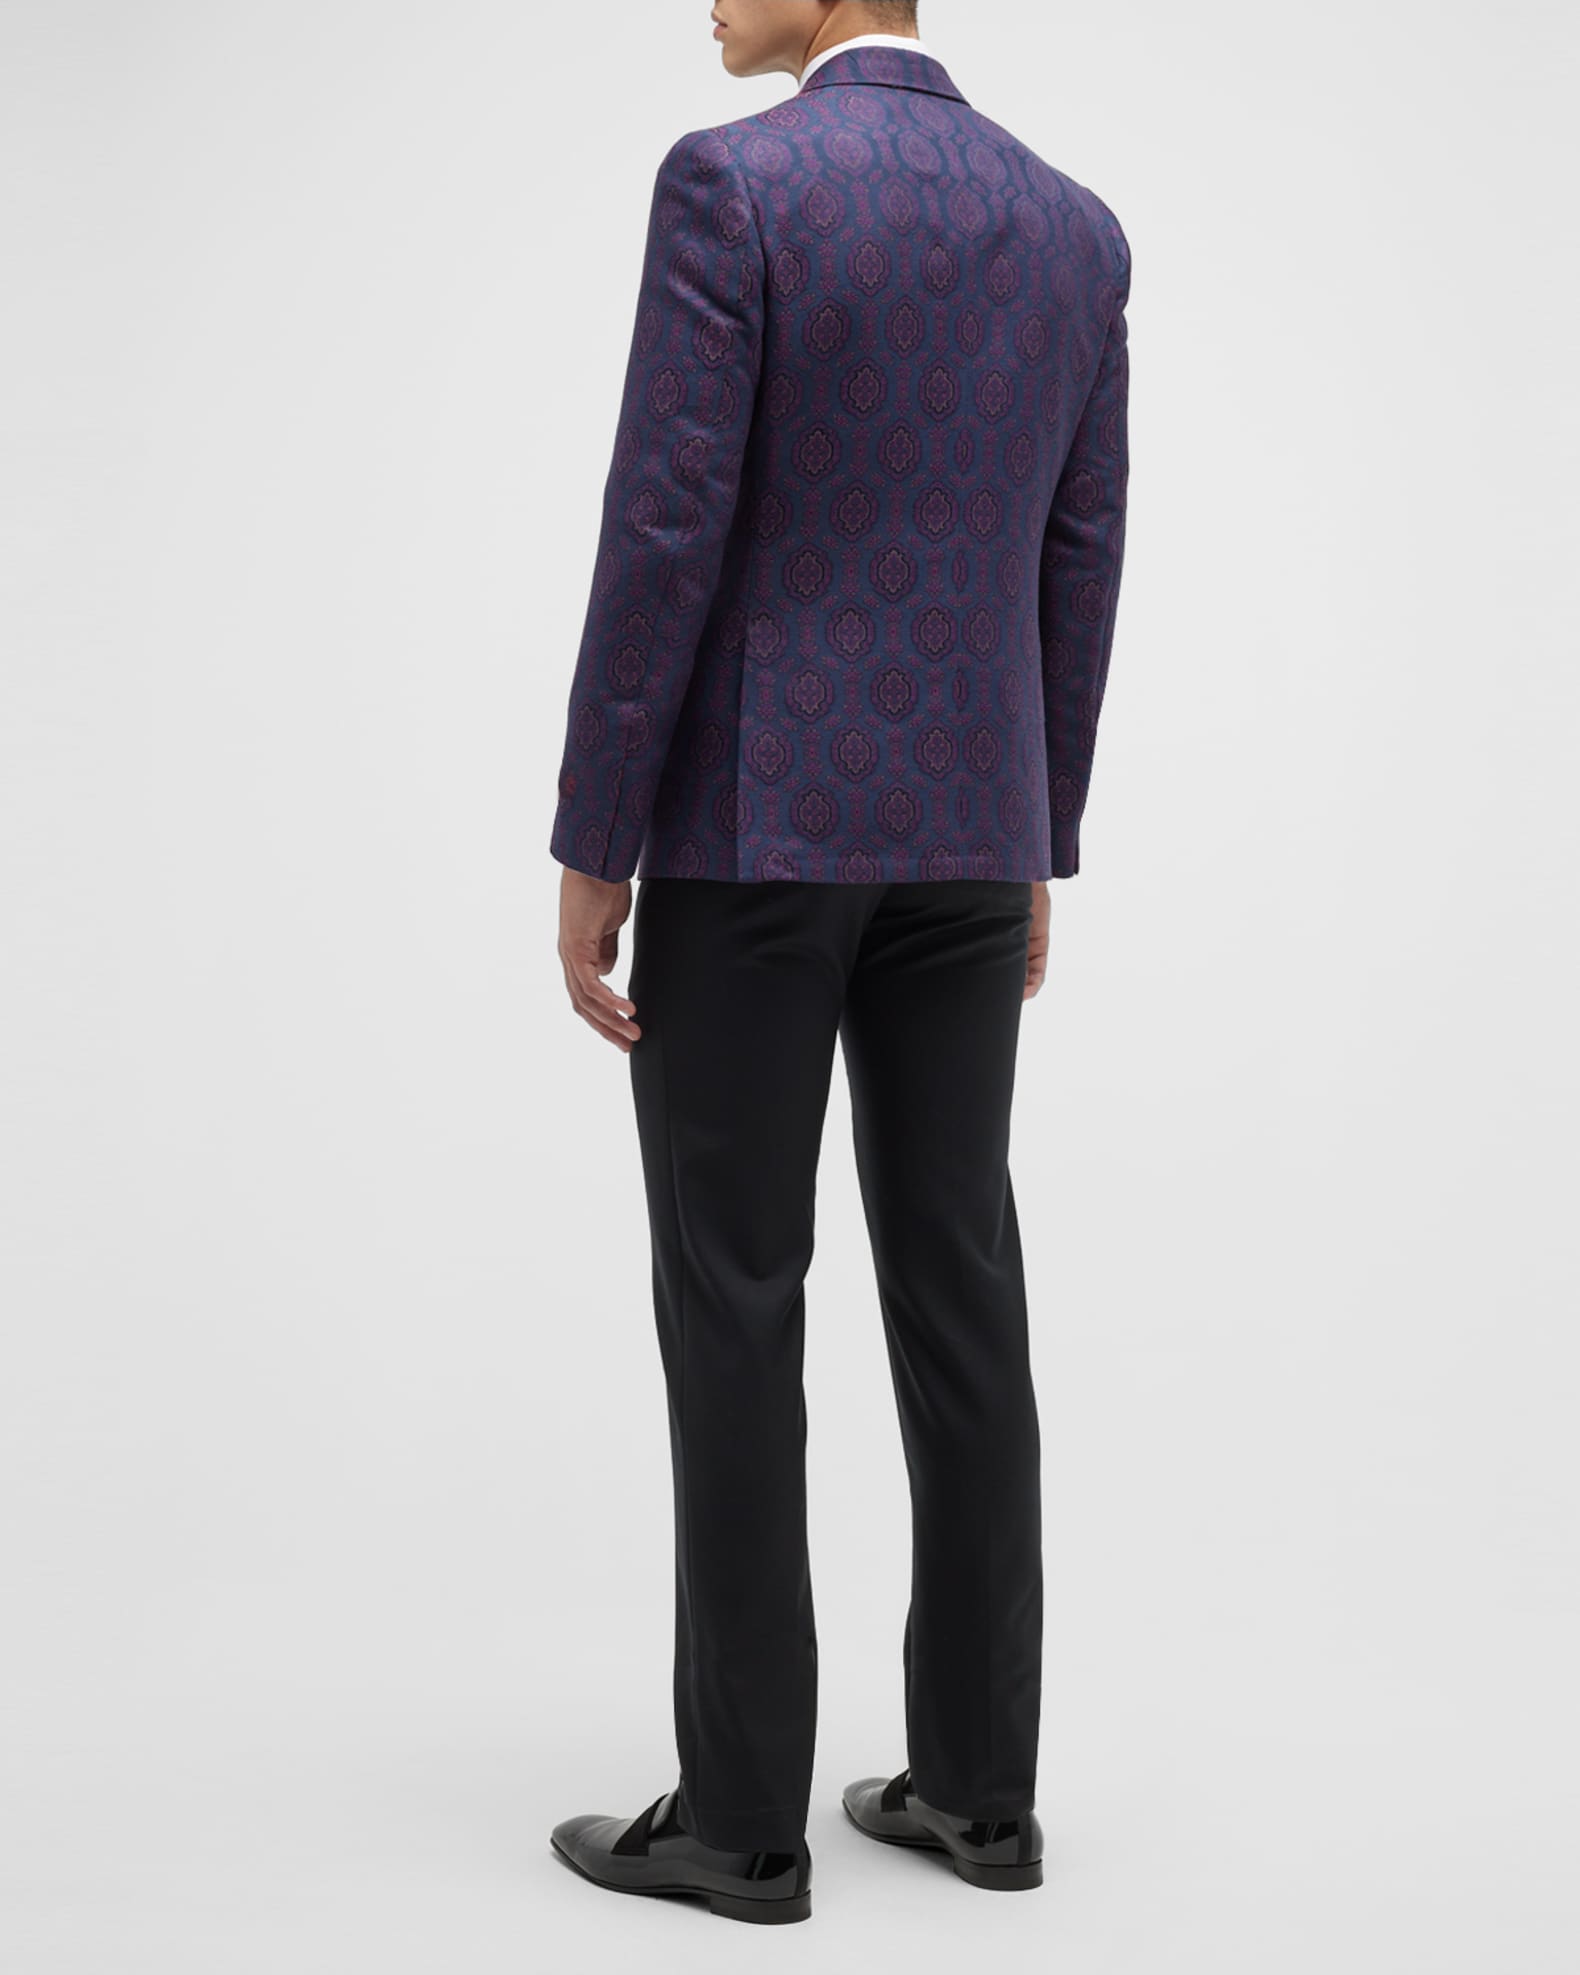 Isaia Men's Sanita Jacquard Tuxedo Jacket | Neiman Marcus